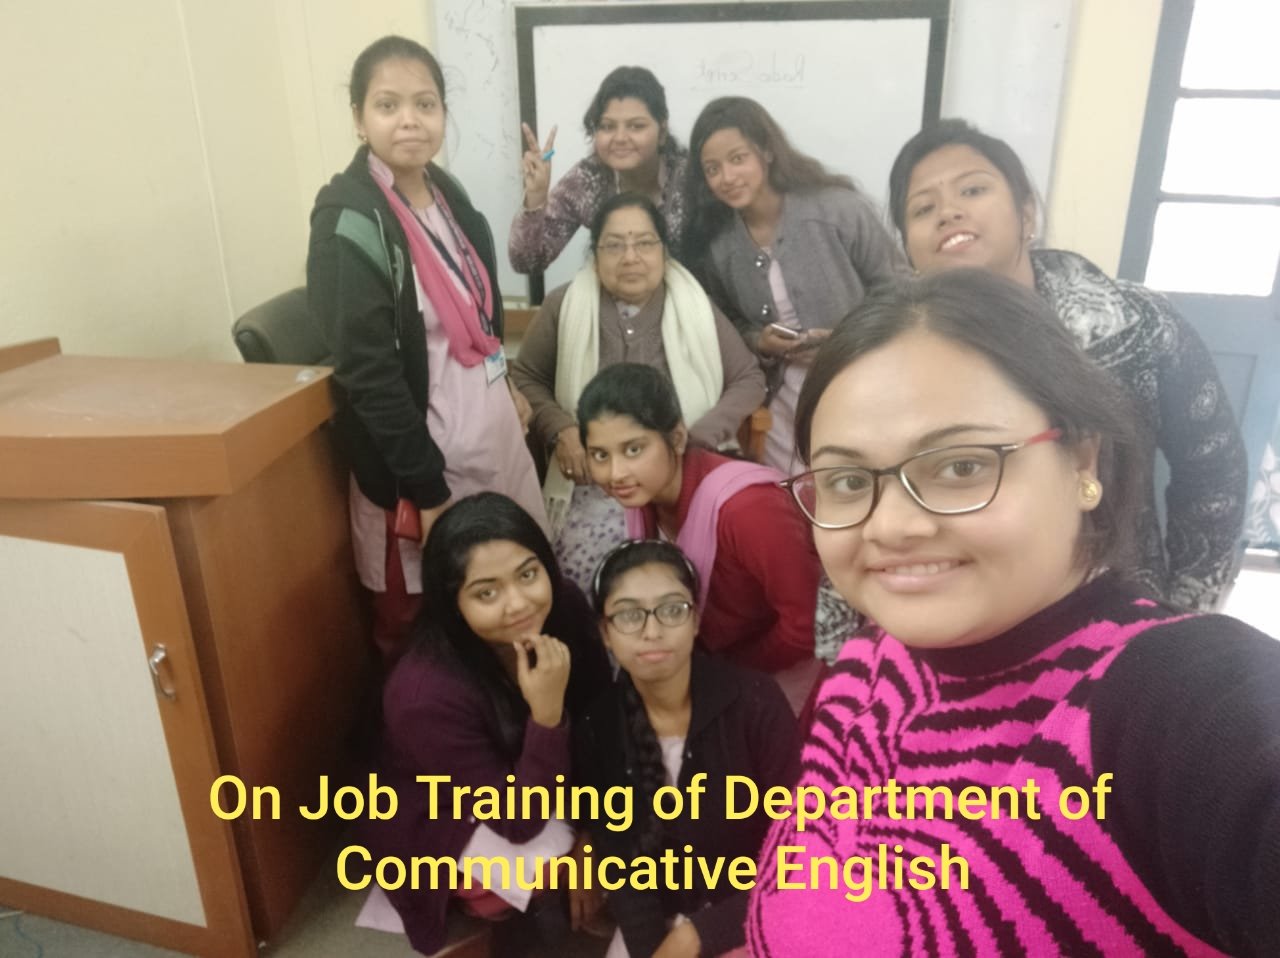 Communicative English Department